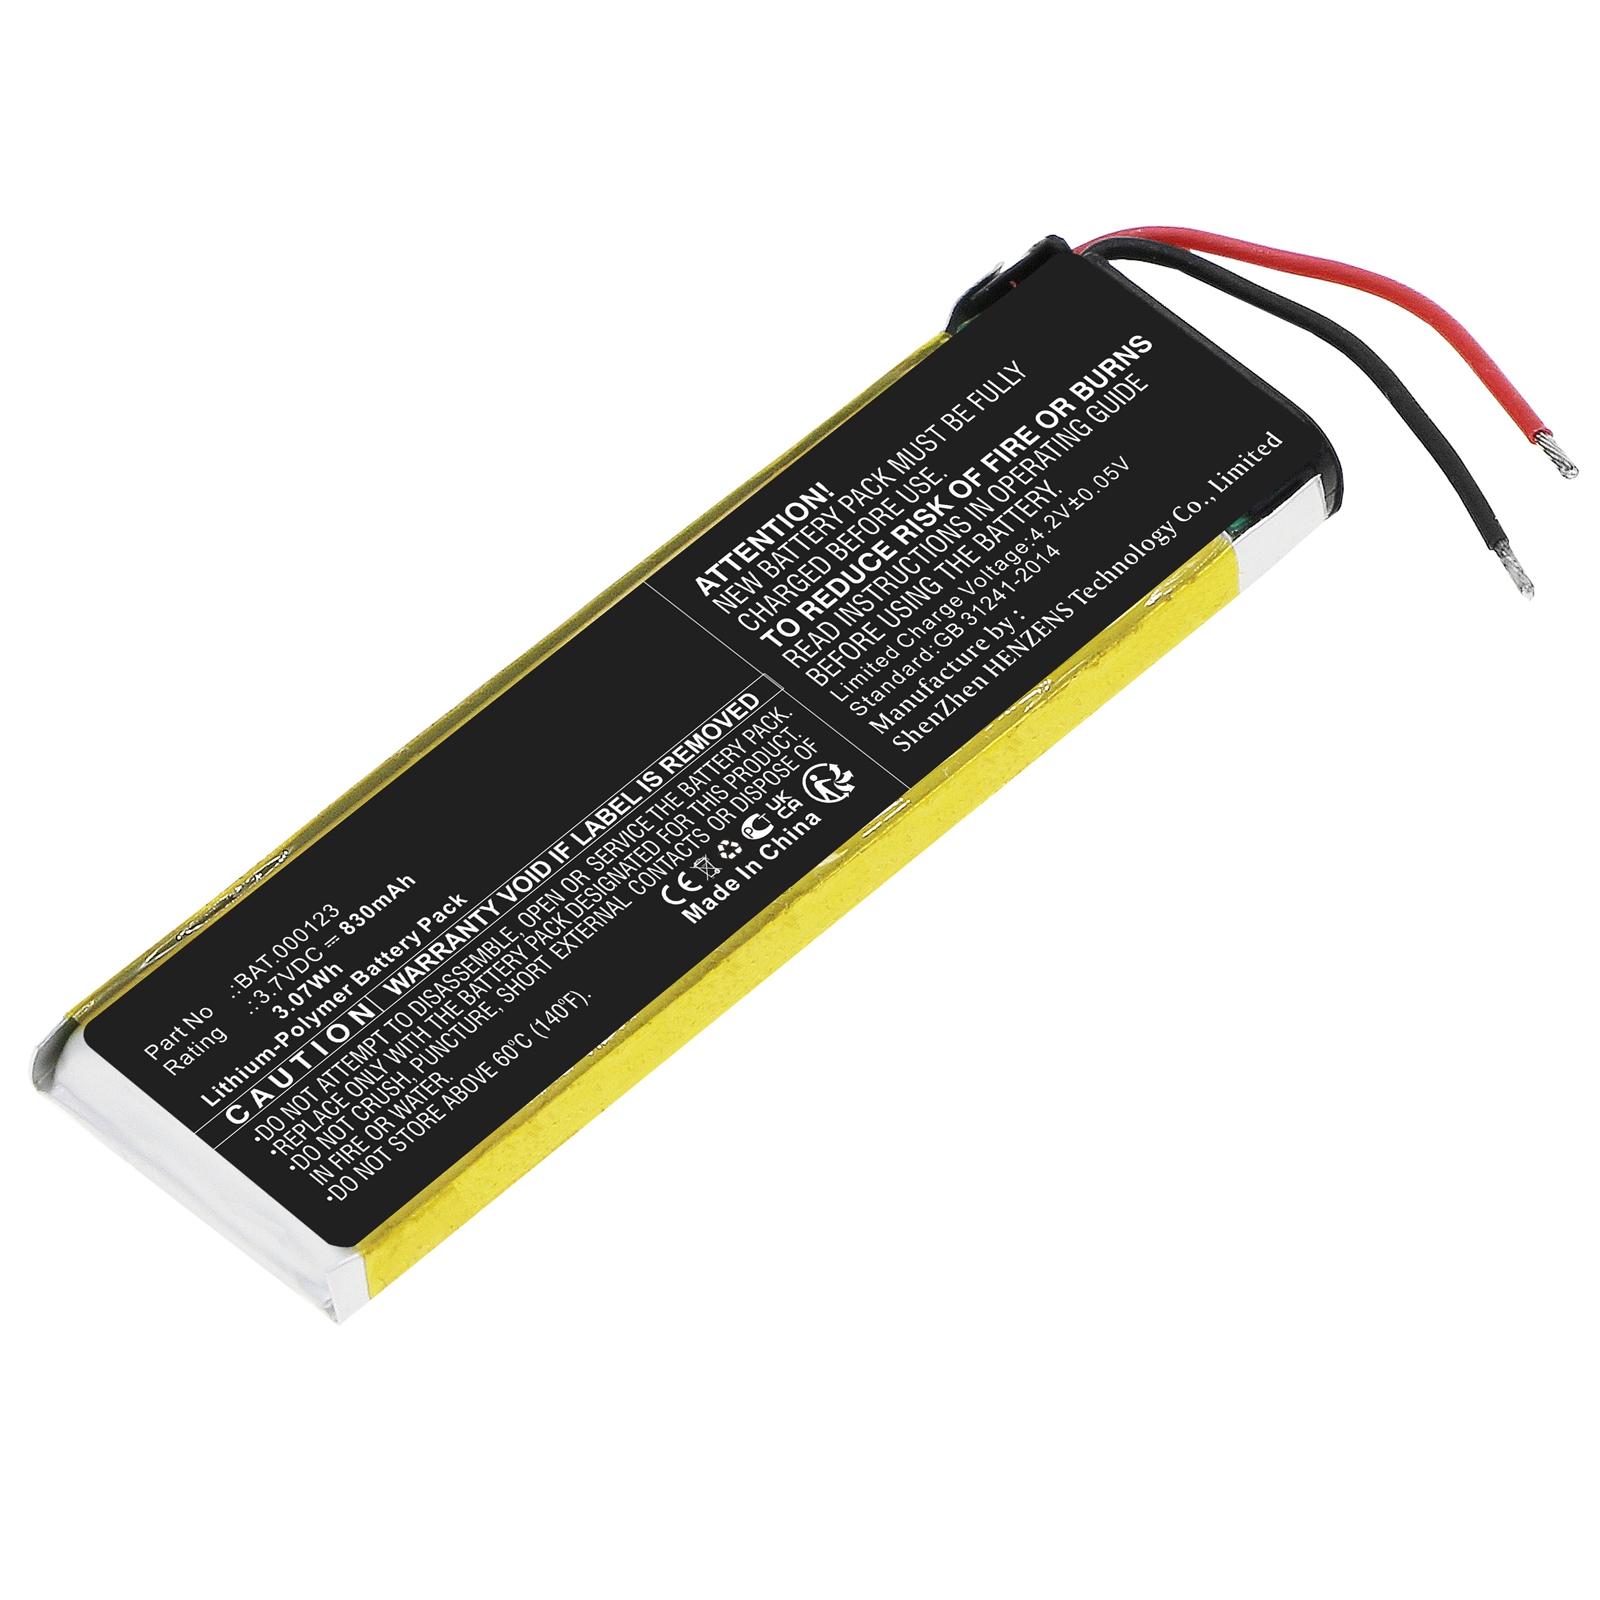 Synergy Digital E-cigarette Battery, Compatible with Philip Morris BAT.000123 E-cigarette Battery (Li-Pol, 3.7V, 830mAh)